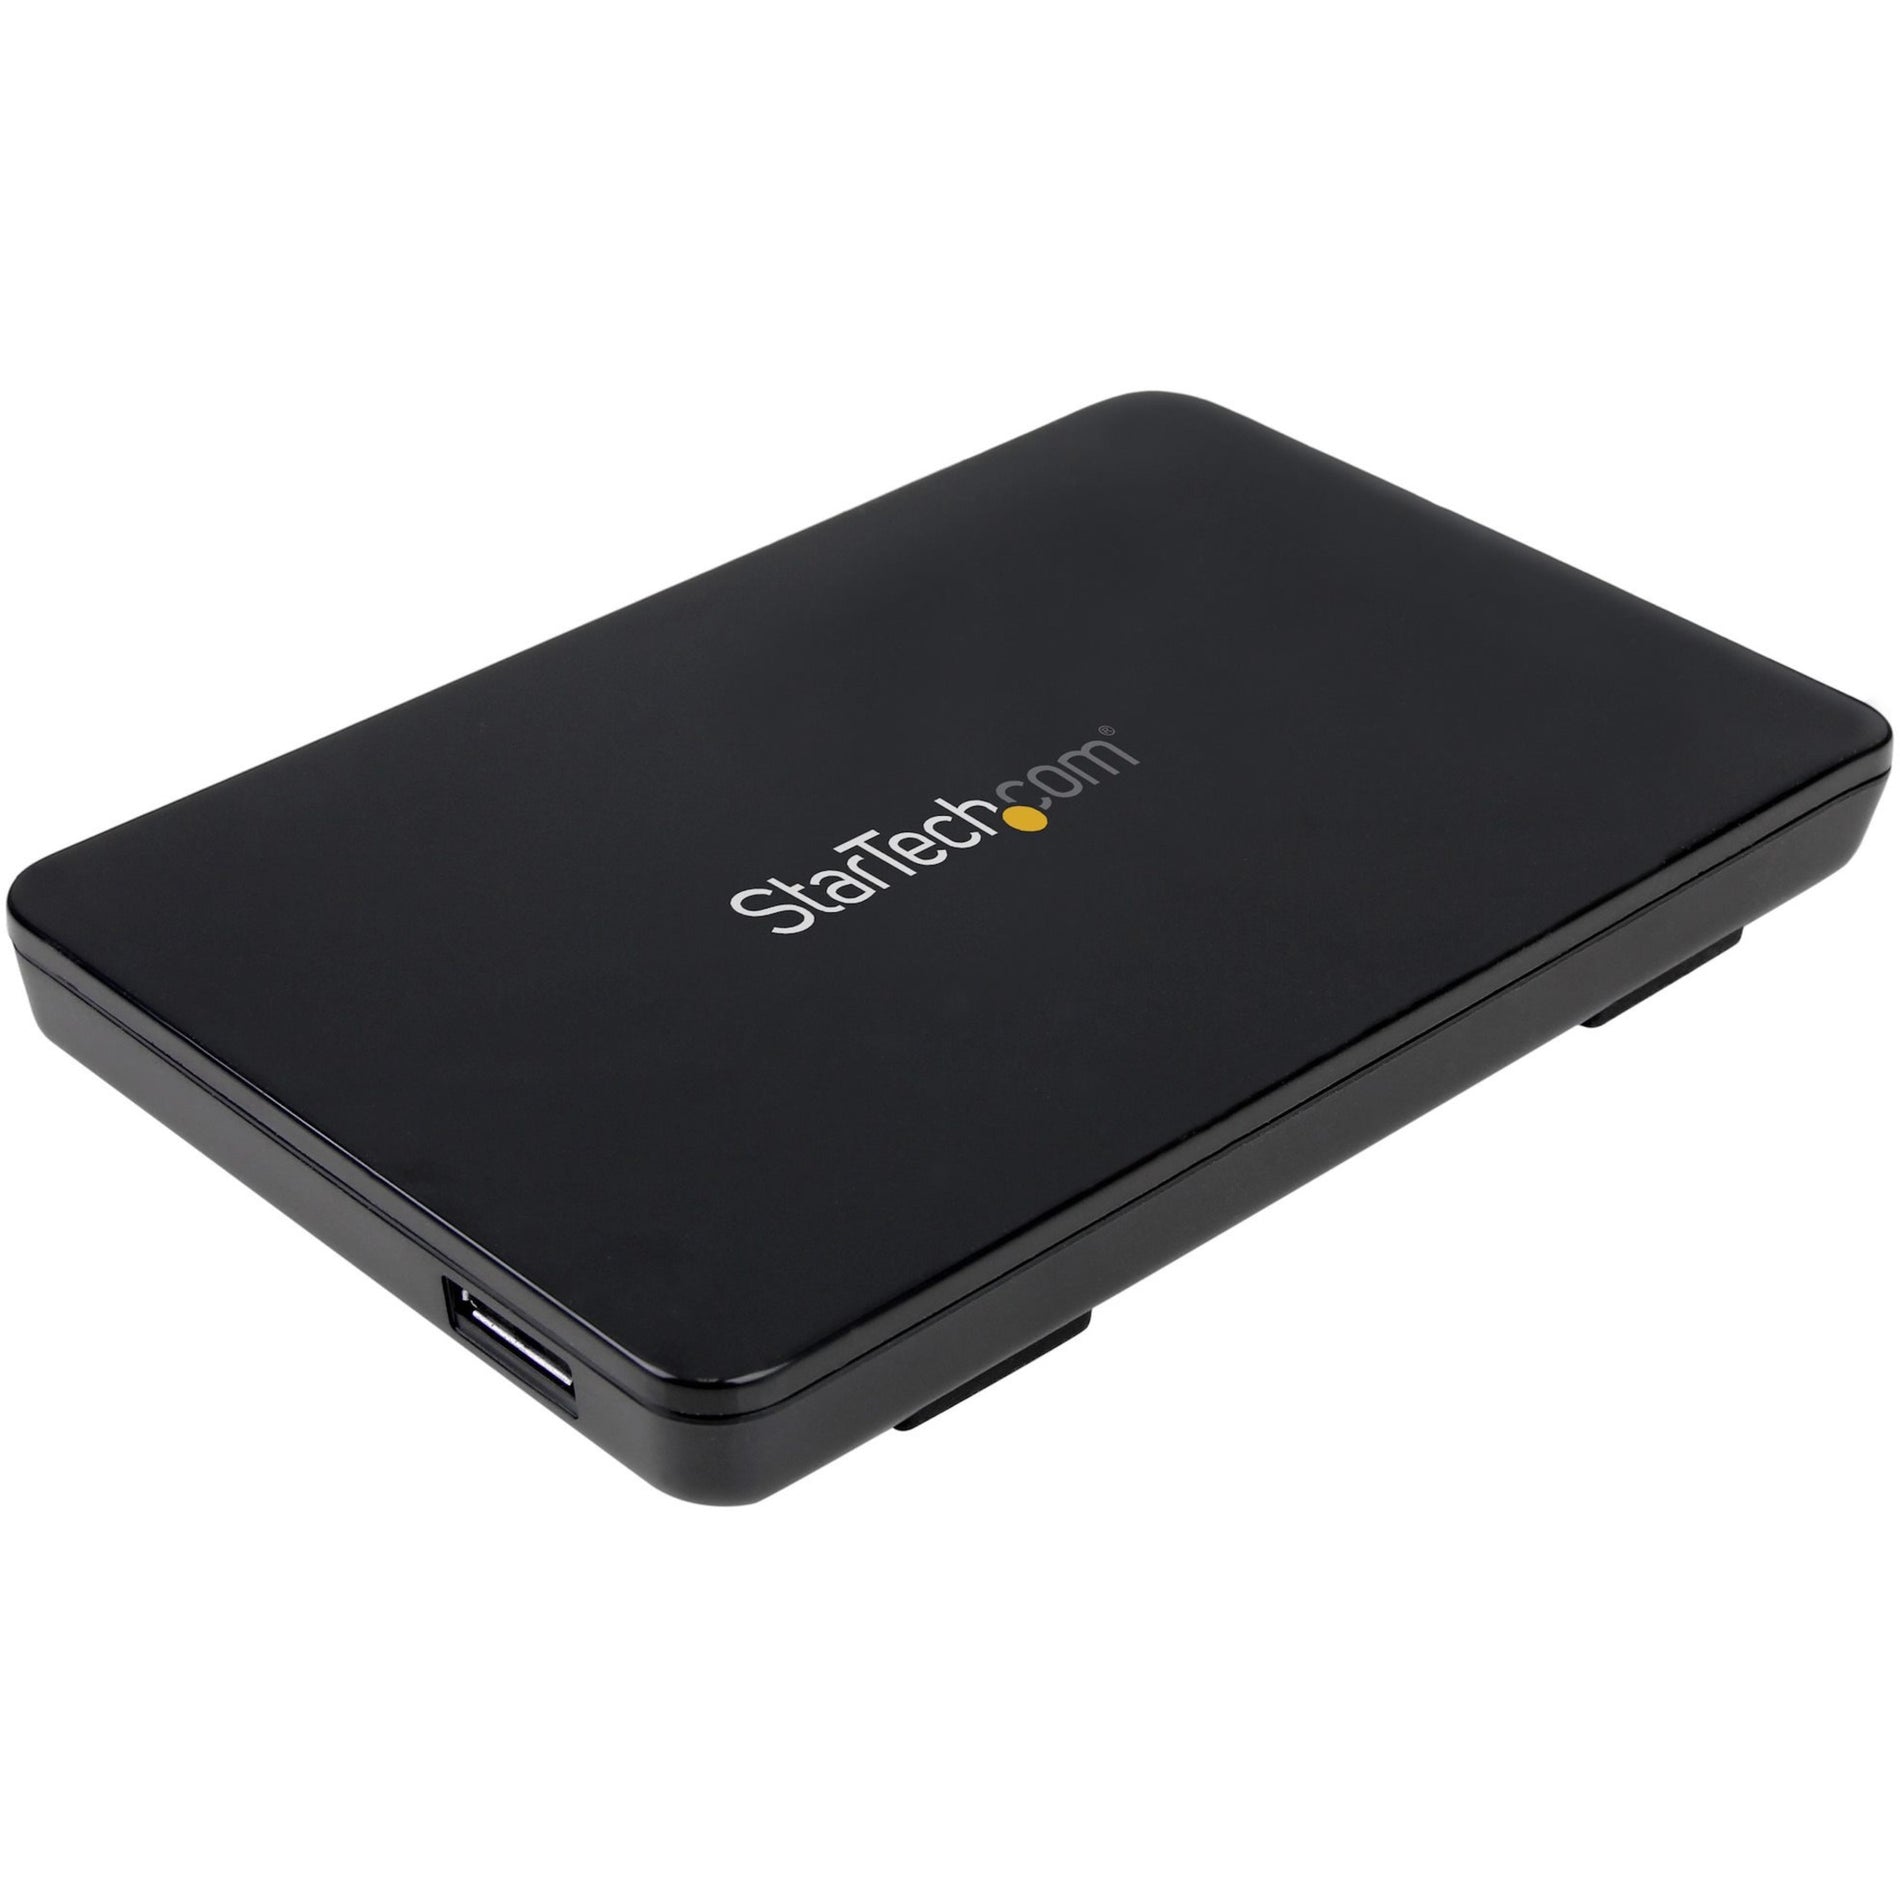 StarTech.com S251BPU313 USB 3.1 Gen 2 (10 Gbps) Tool-free Enclosure for 2.5" SATA Drives, Fast Data Transfer, Easy Installation